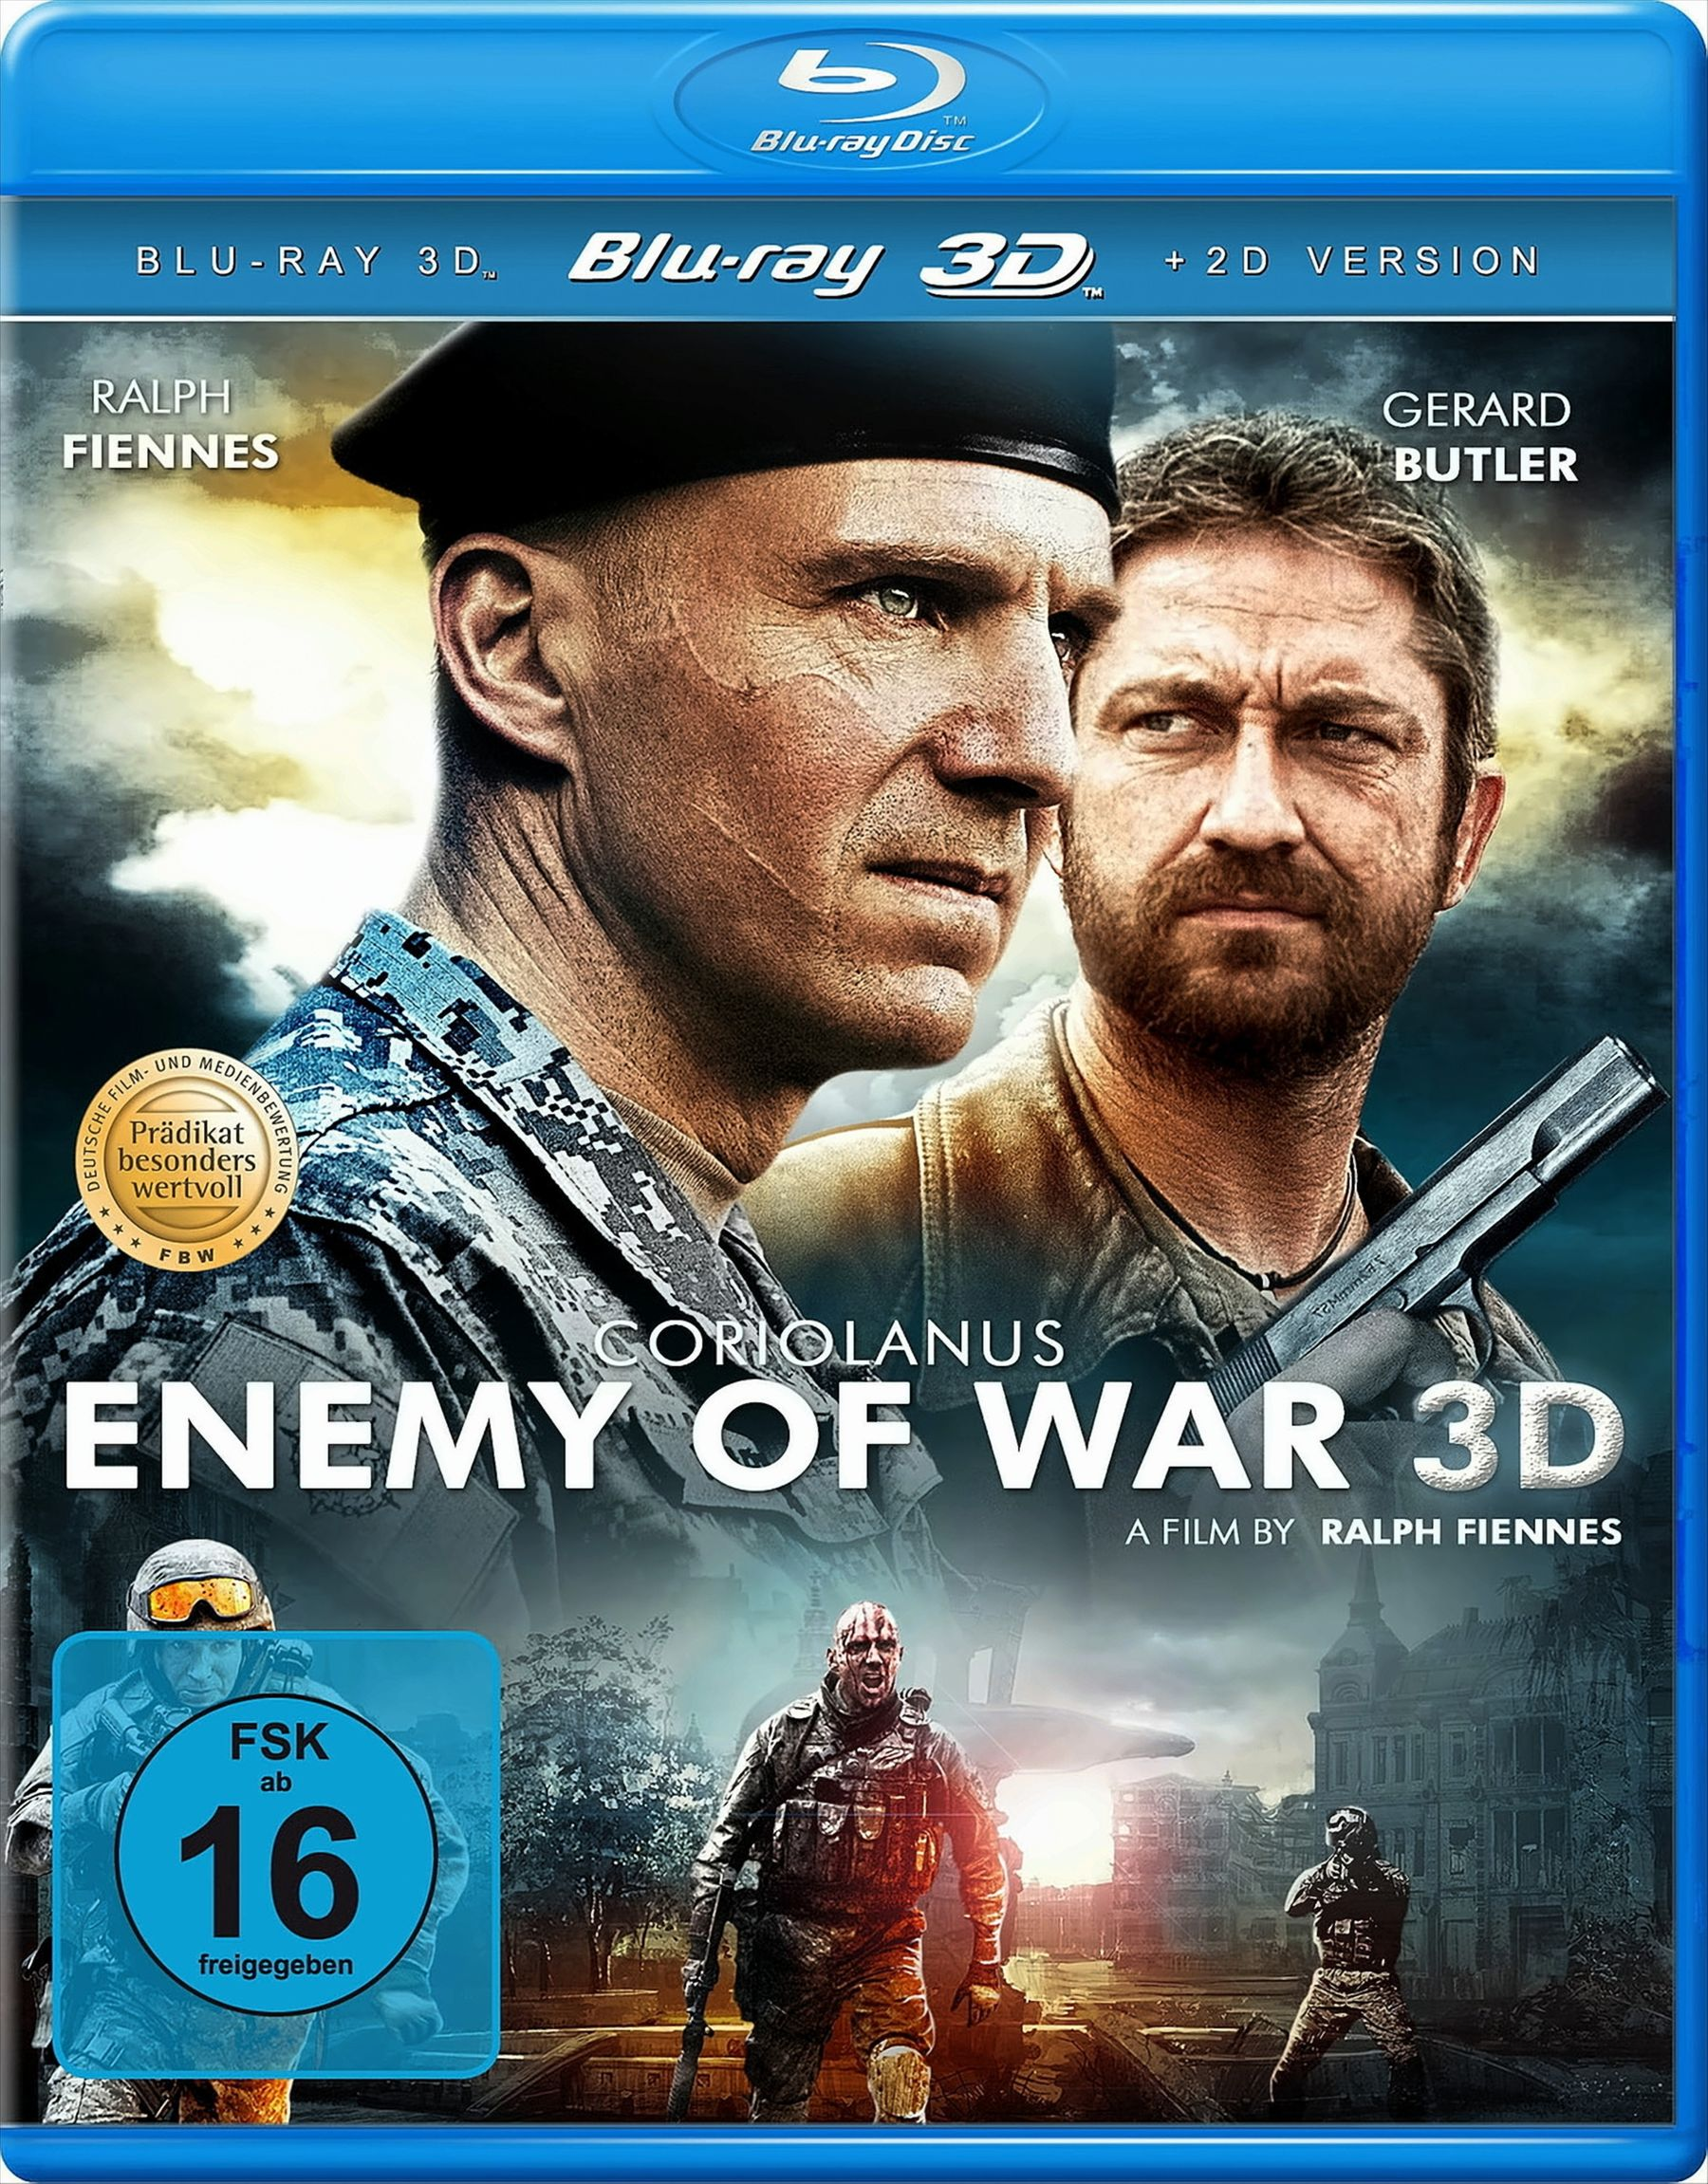 Coriolanus - Enemy War Blu-ray 3D of